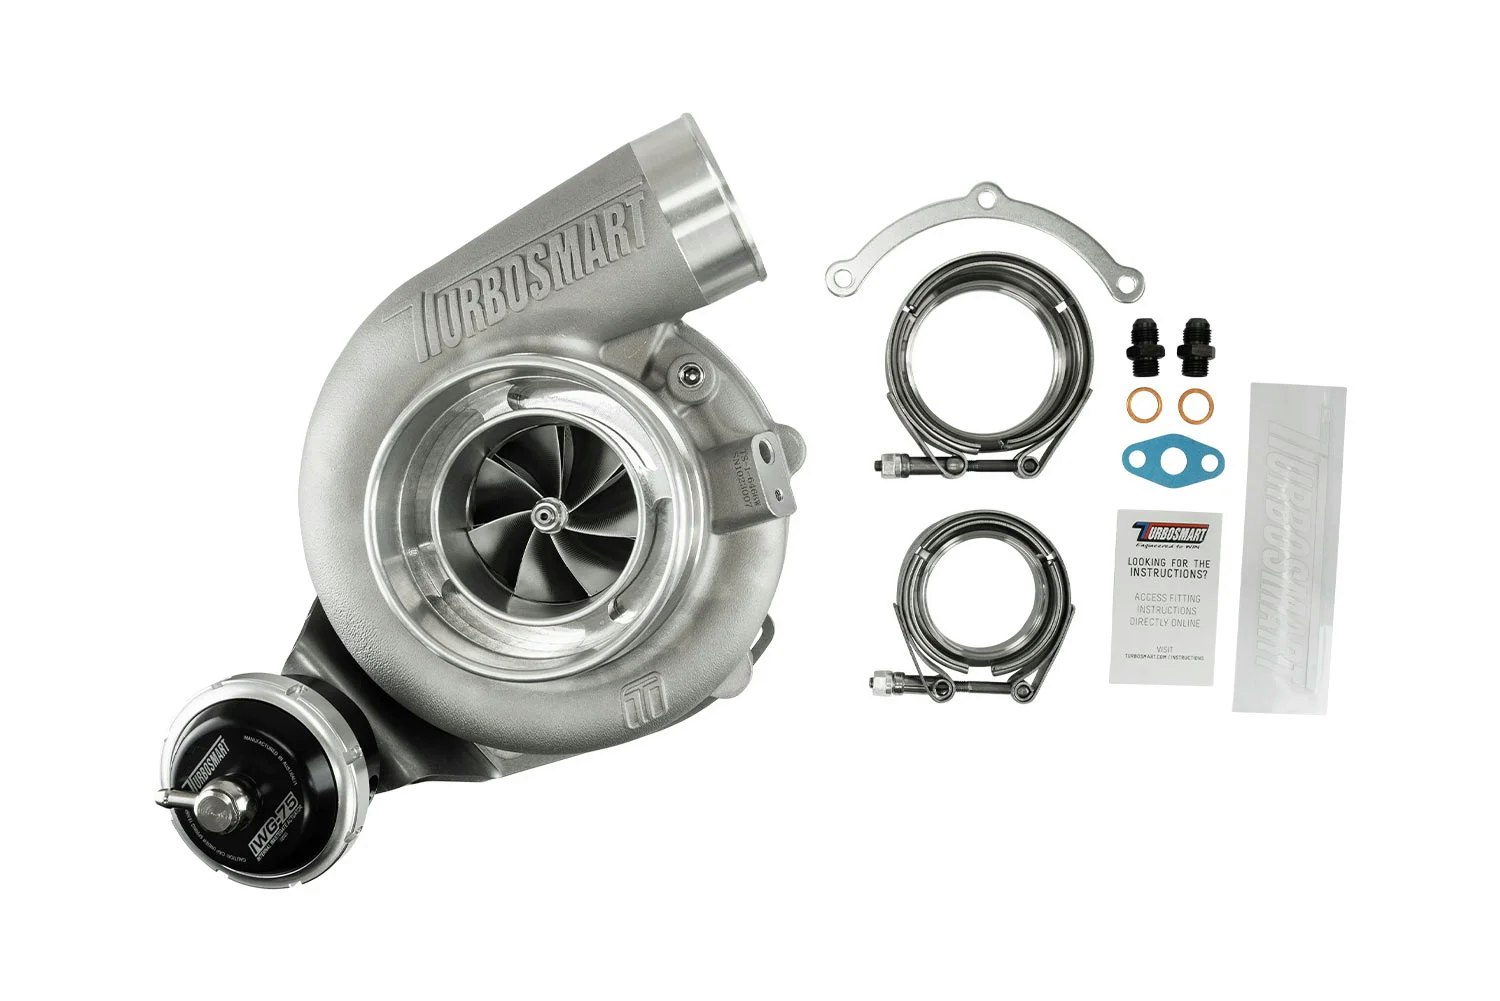 Turbosmart turbocharger 6262 V-Band/V-Band - internal wastegate, IWG75